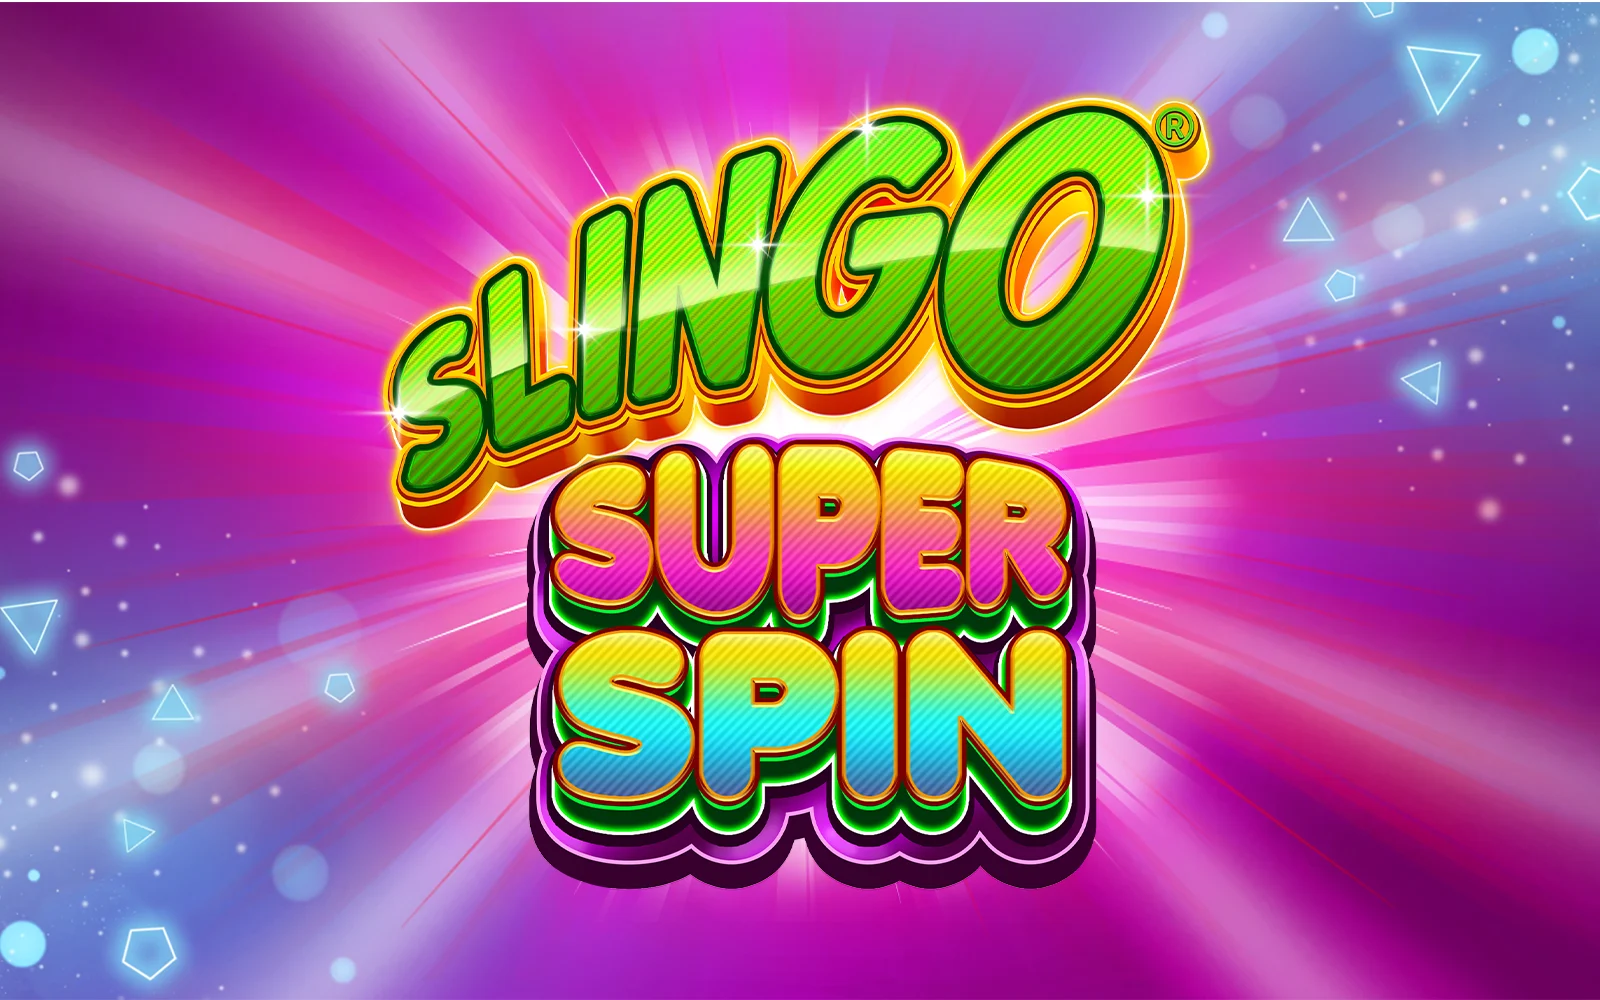 Play Slingo Super Spin on Starcasino.be online casino